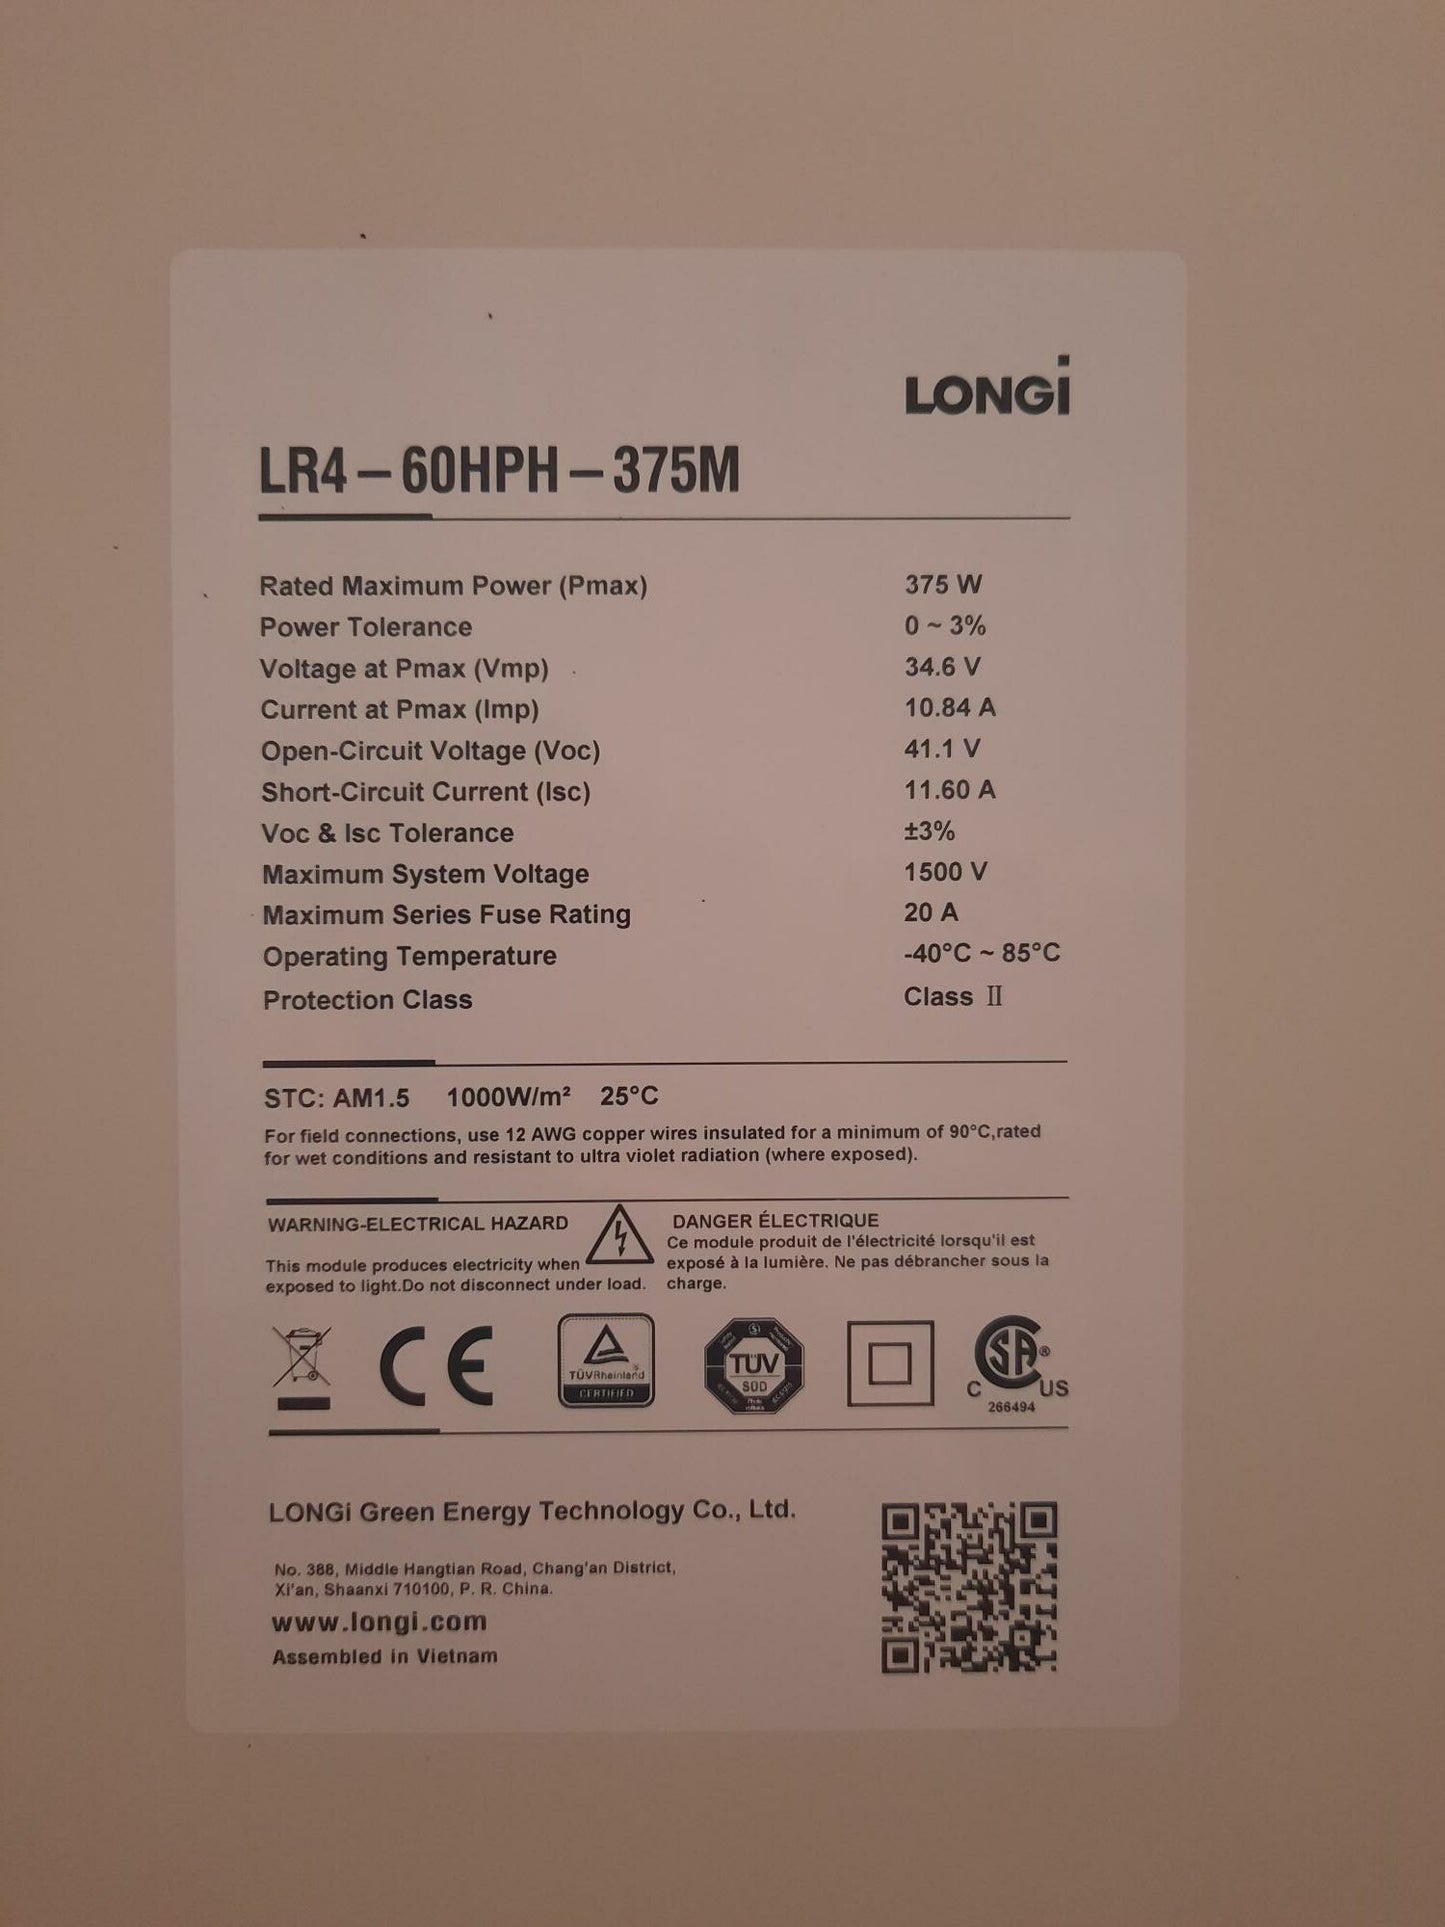 LONGi Hi-MO 375W Panel